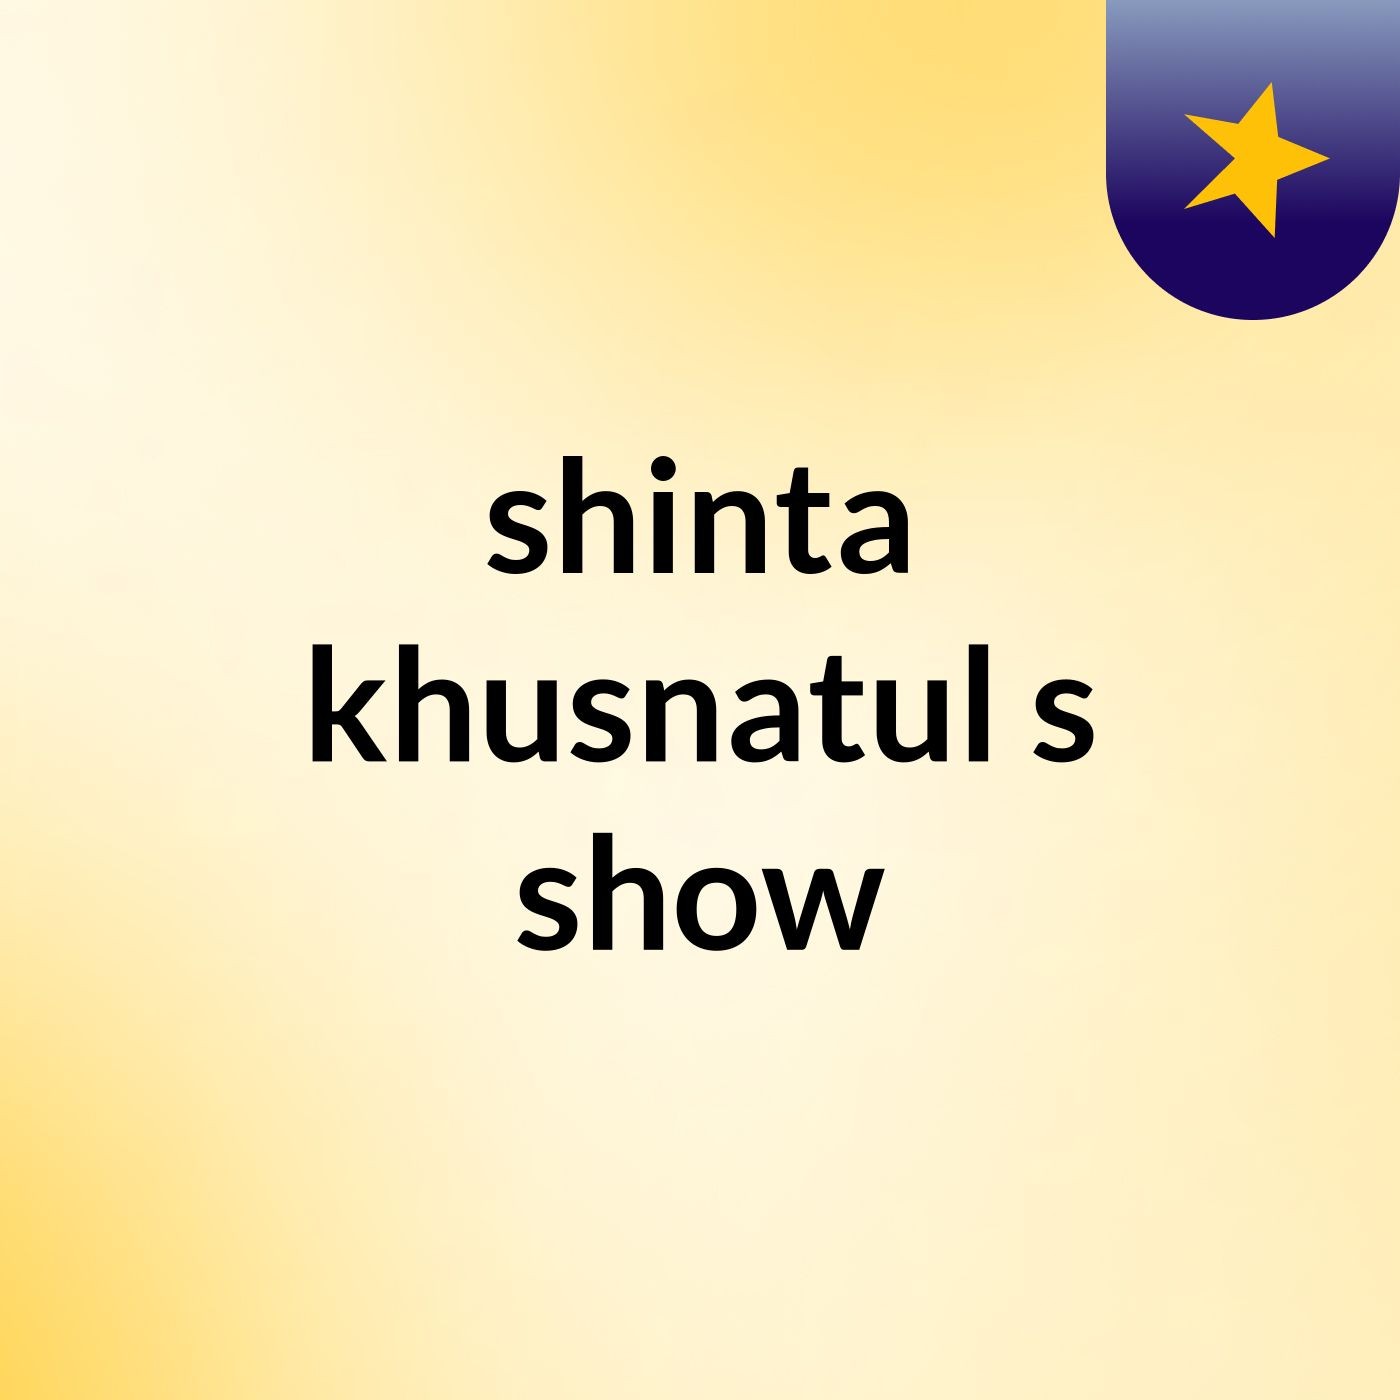 Episode 26 - shinta khusnatul's show